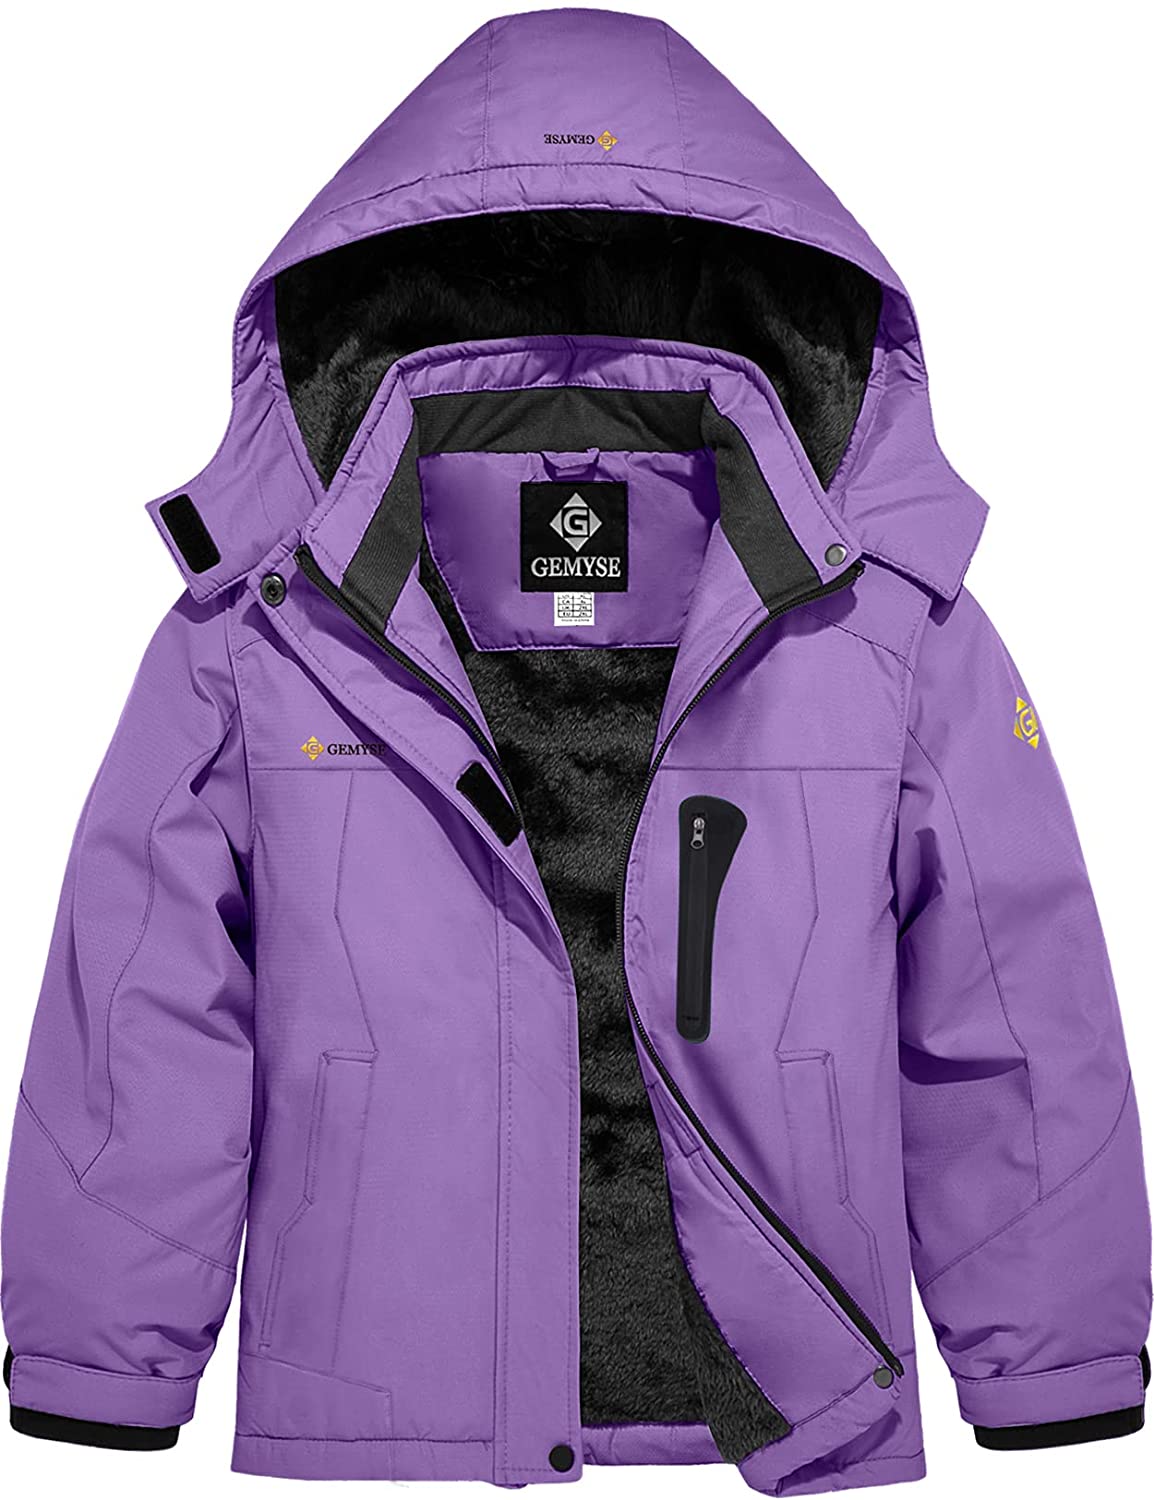 GEMYSE Girl's Waterproof Ski Snow Jacket Fleece Windproof Winter Jacket with Hood 